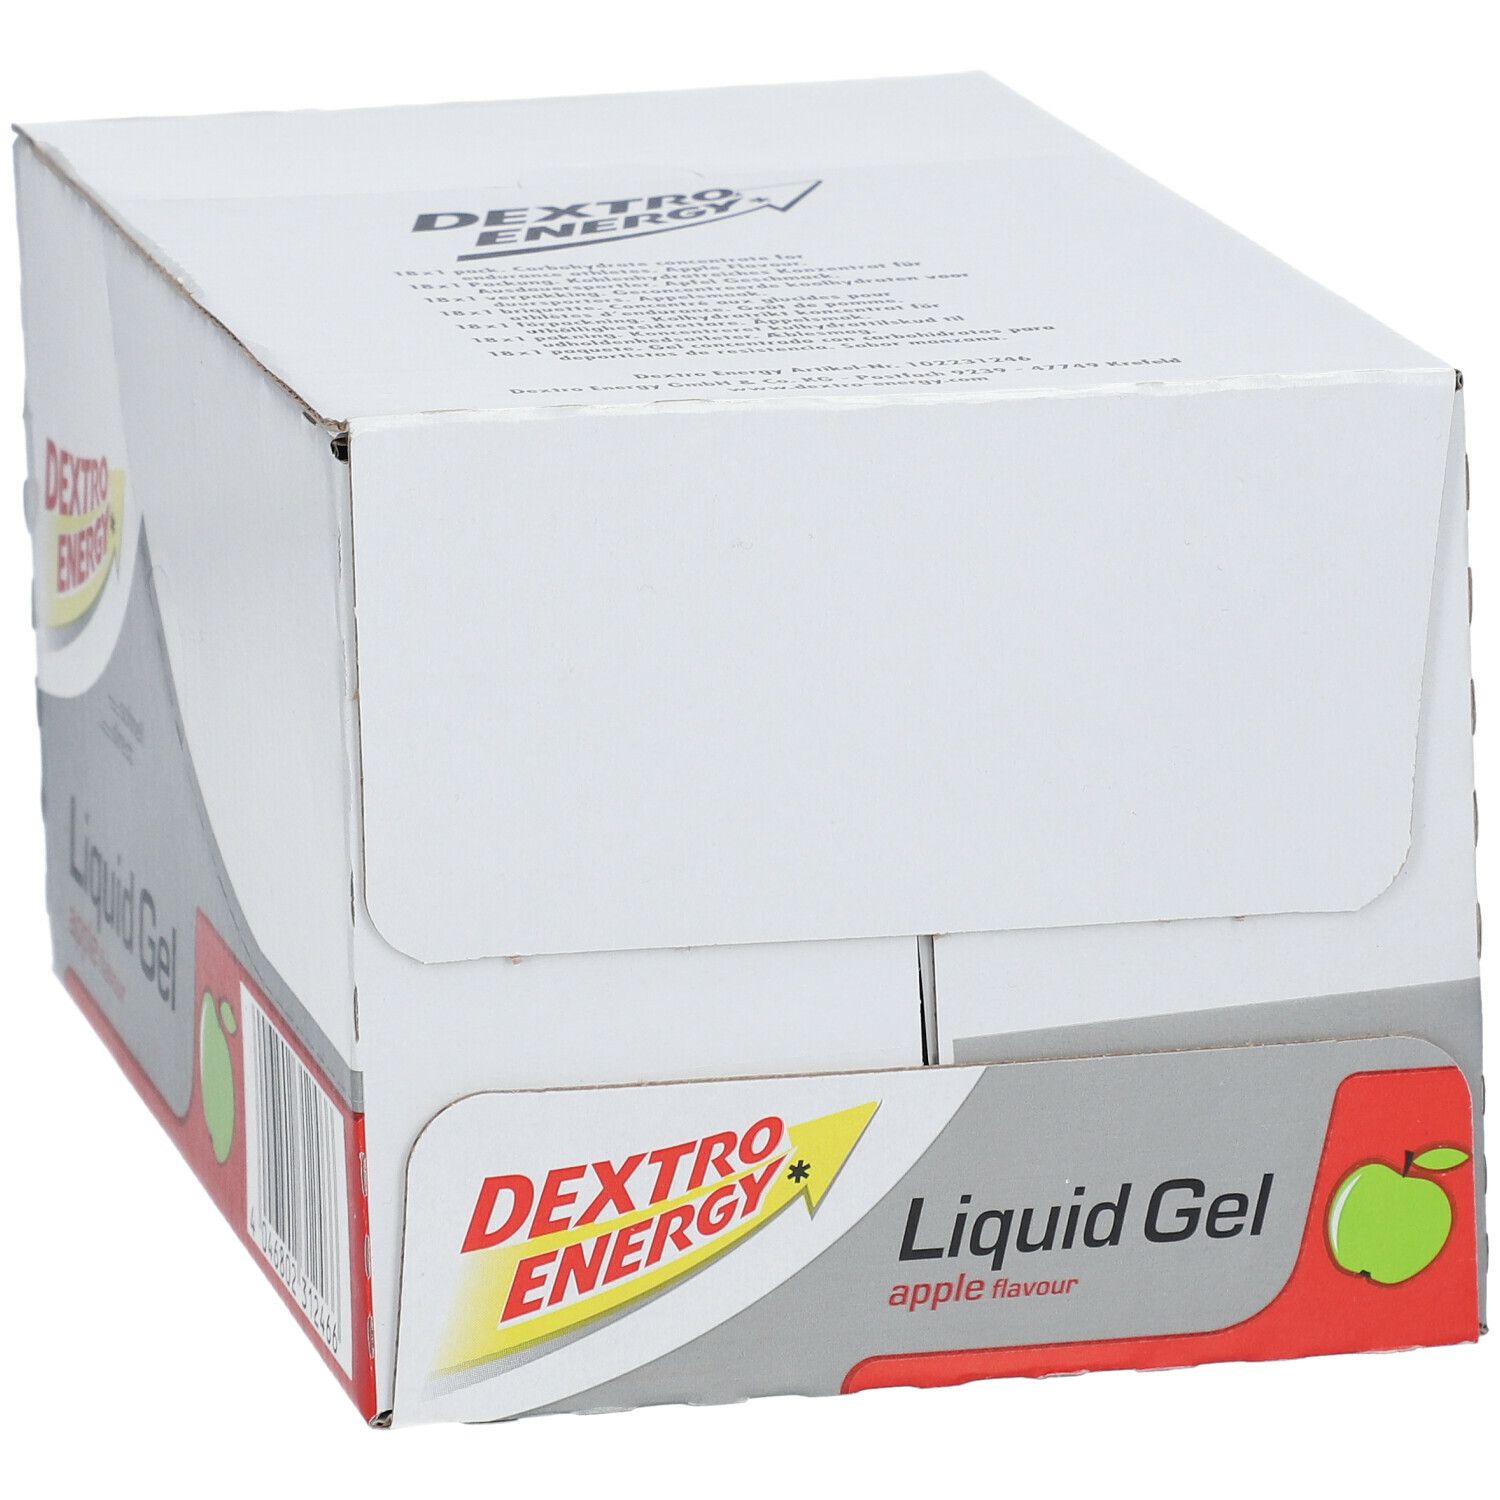 Dextro Energy Liquid Gel, Apfel